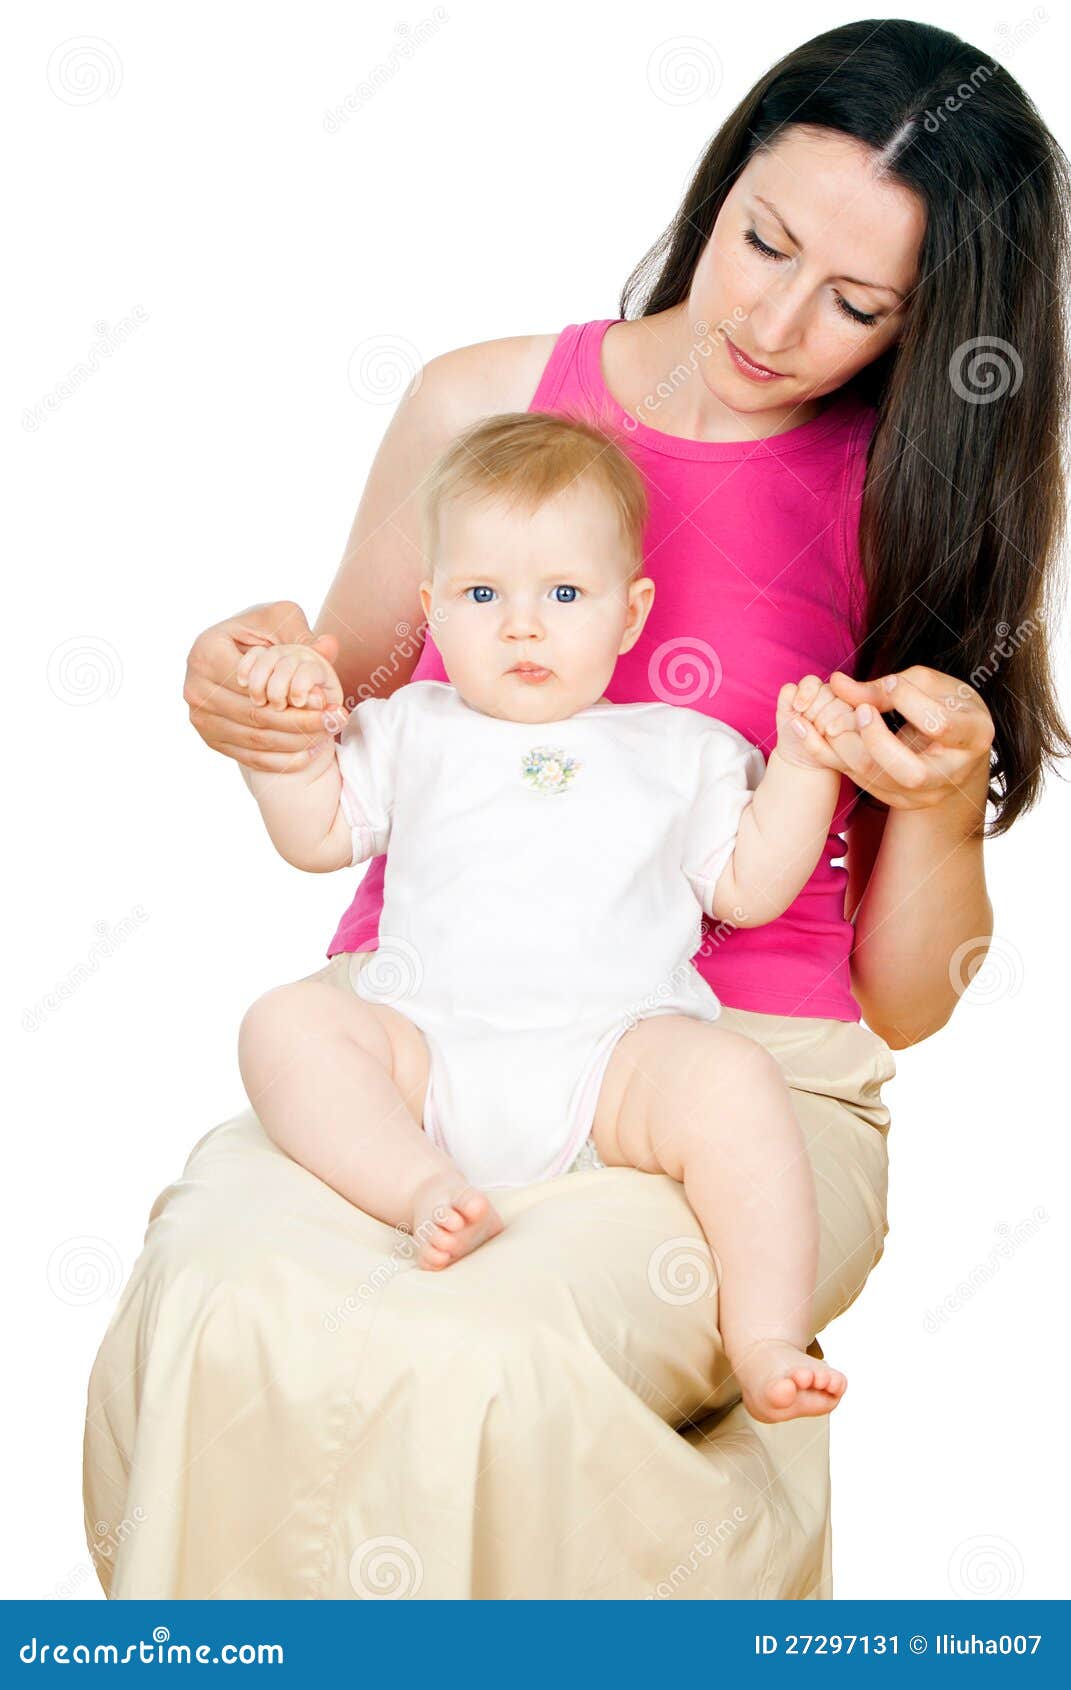 Сижу у мамы на коленях. Ребенок сидит на коленях. Ребенок на коленях у мамы. Женщина с ребенком сидит. Девочка сидит на маме.